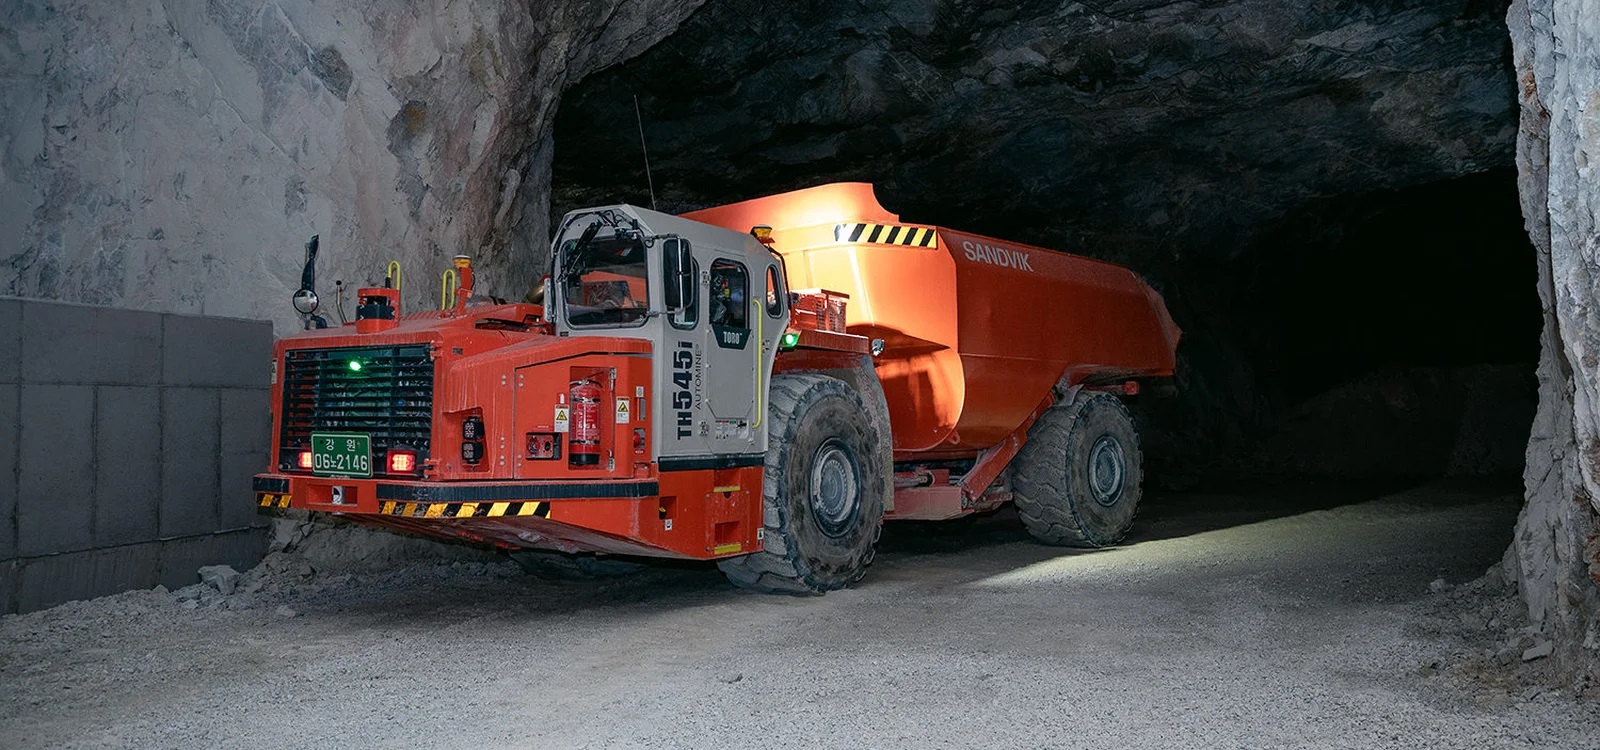 Sandvik은 TH545i가 장착된 Automine으로 한국에서 광산 자동화를 개척하고 있습니다.